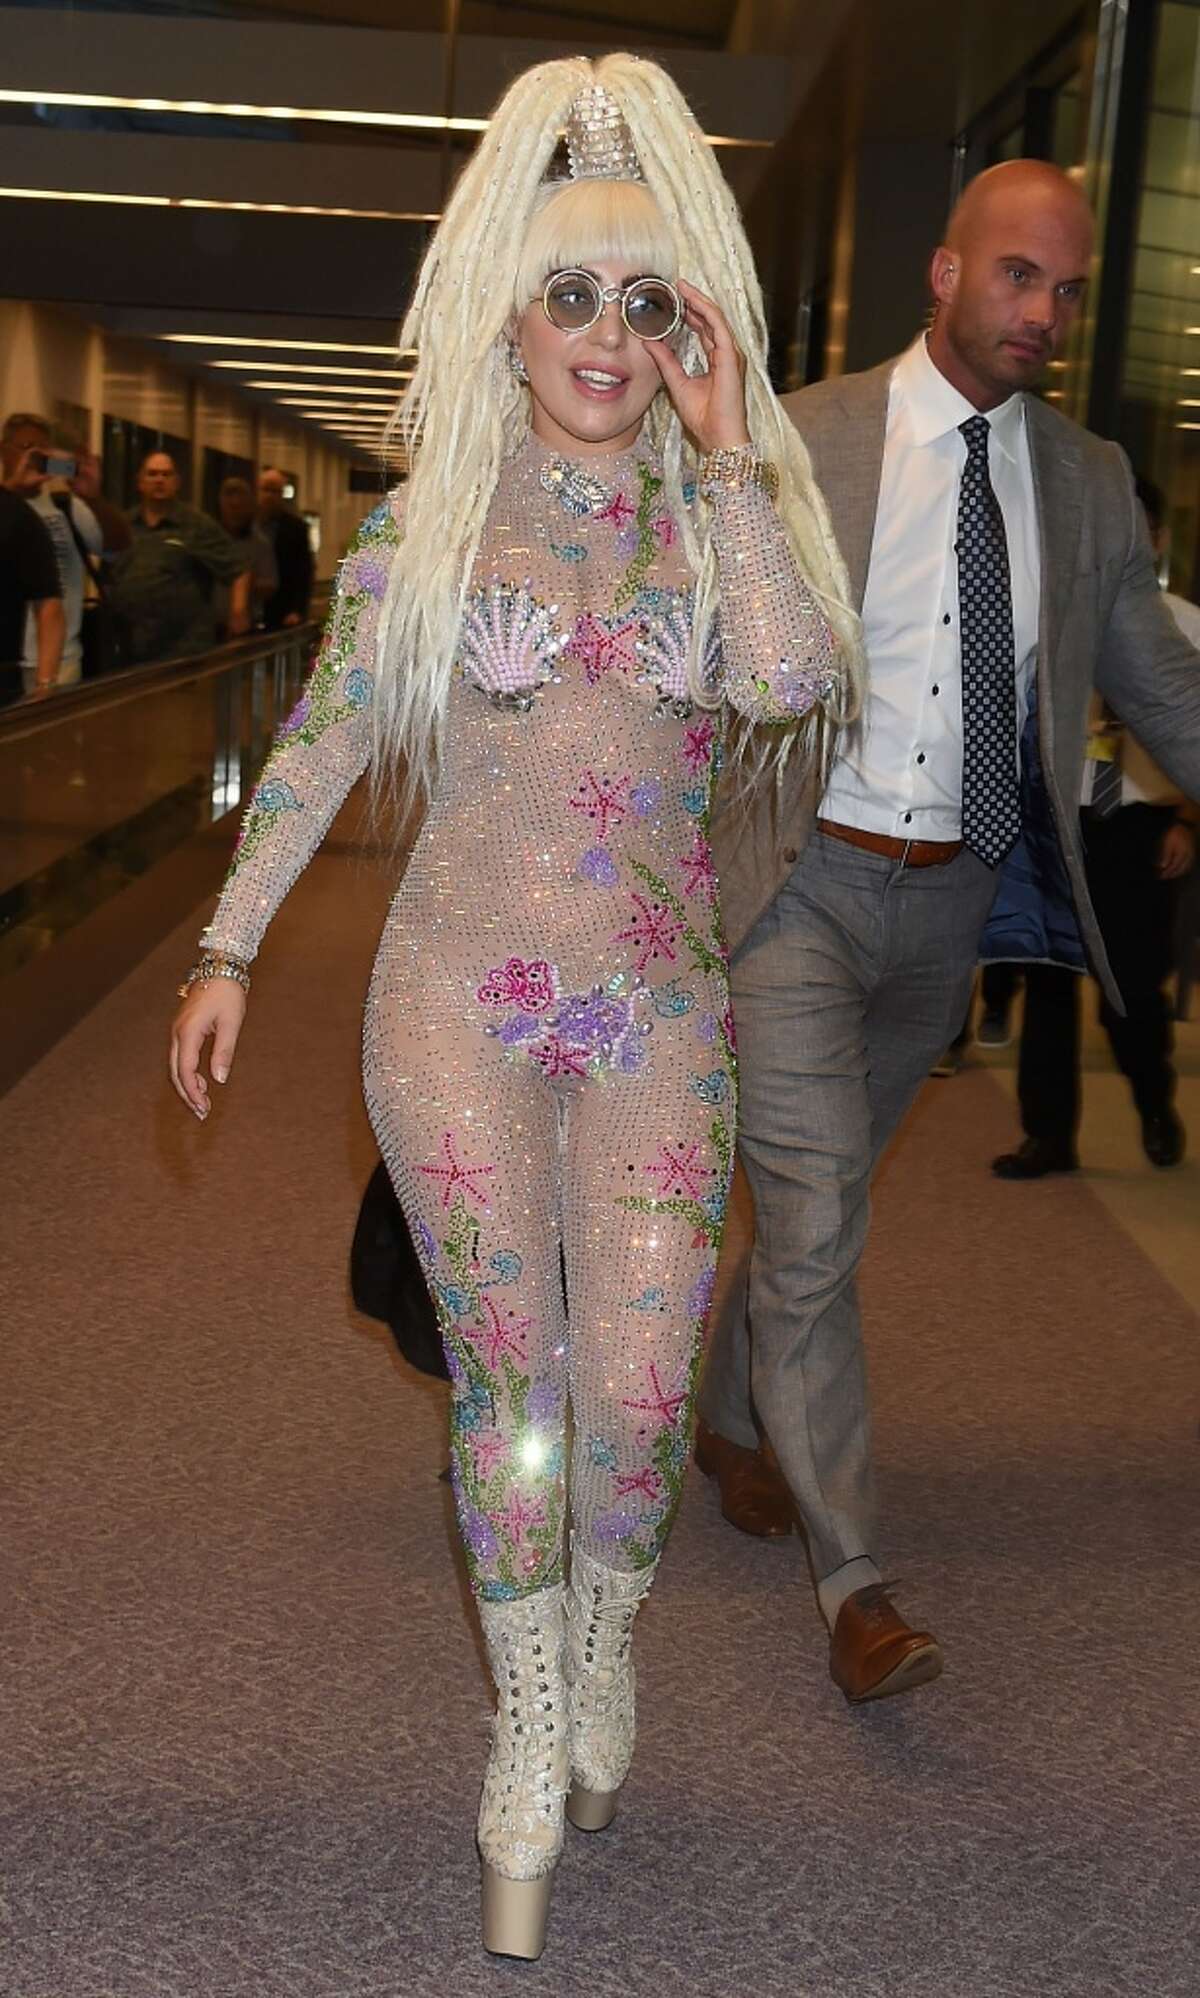 Lady Gaga arrives at Narita International Airport on August 12, 2014 in Narita, Japan.